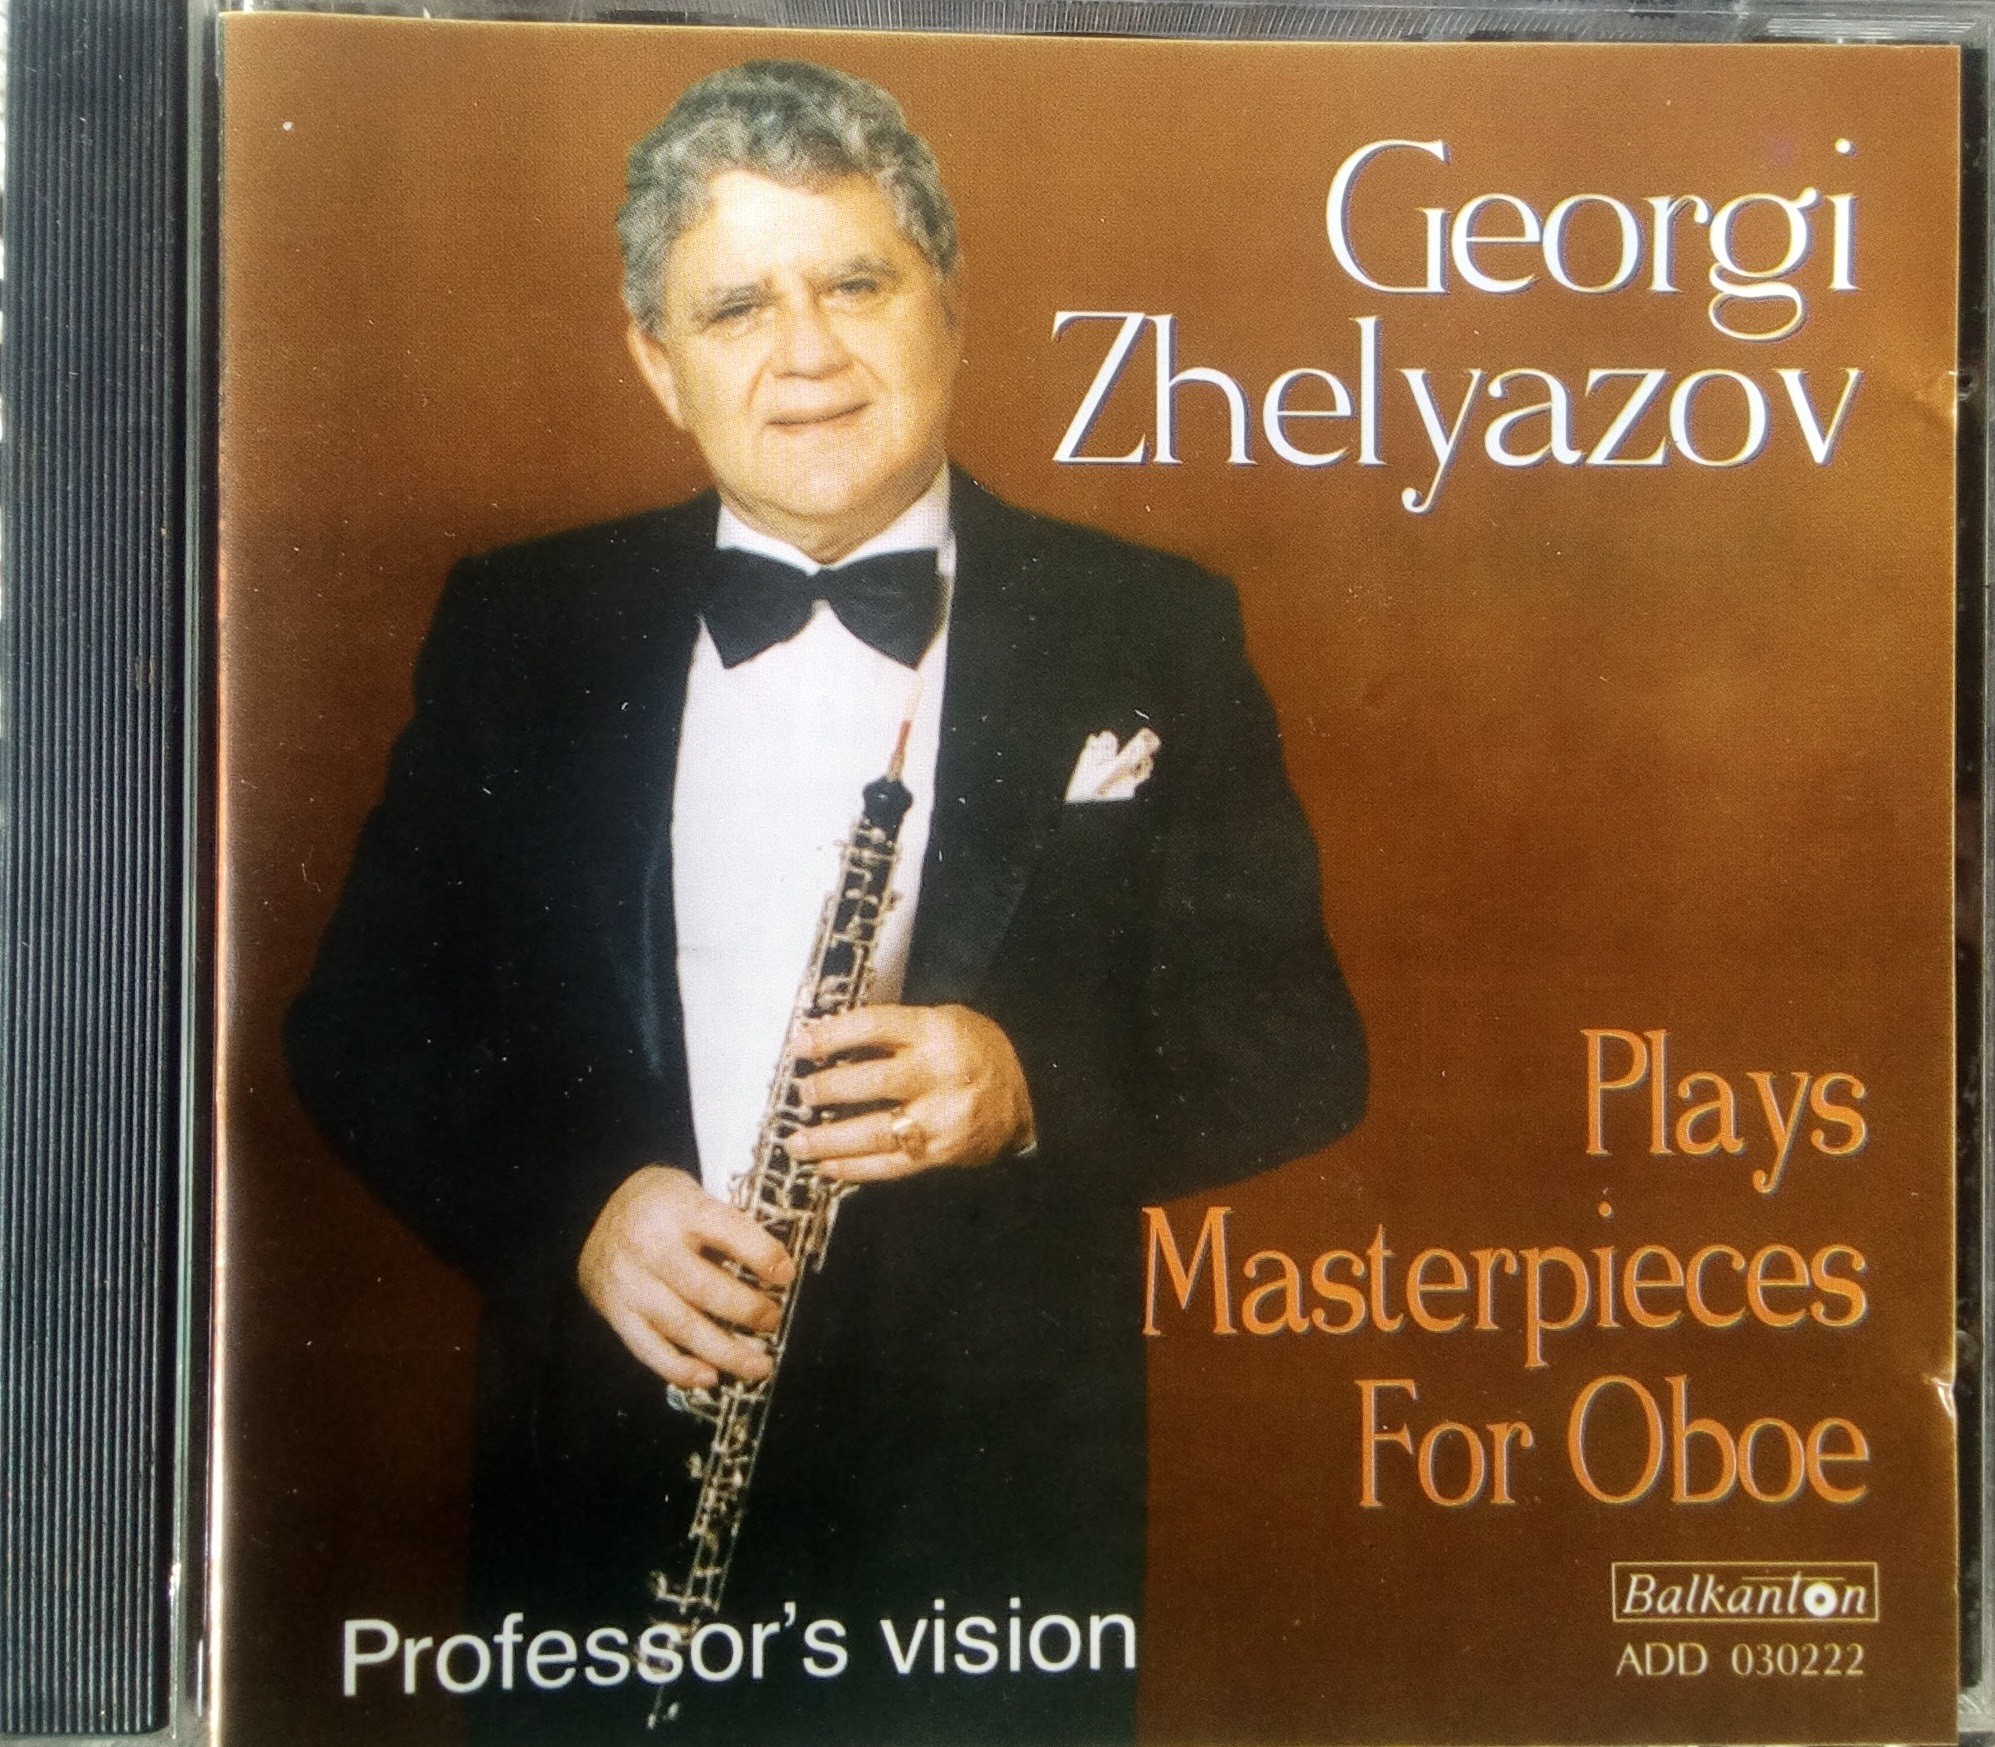 Georgi Zhelyazov plays materpieces for oboe. "Professor's vision"